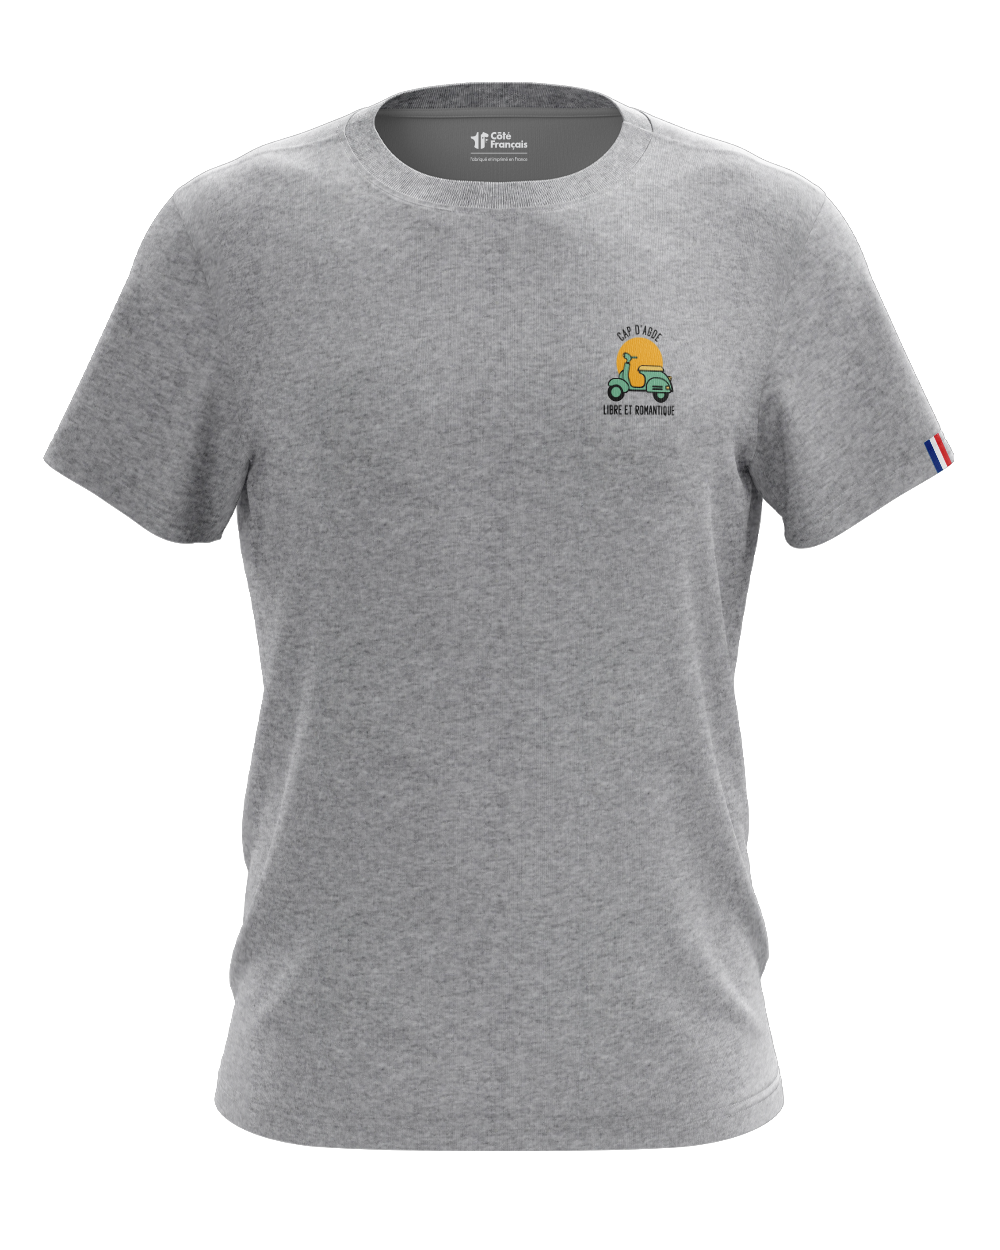 T-Shirt "Cap d'agde" - gris chiné